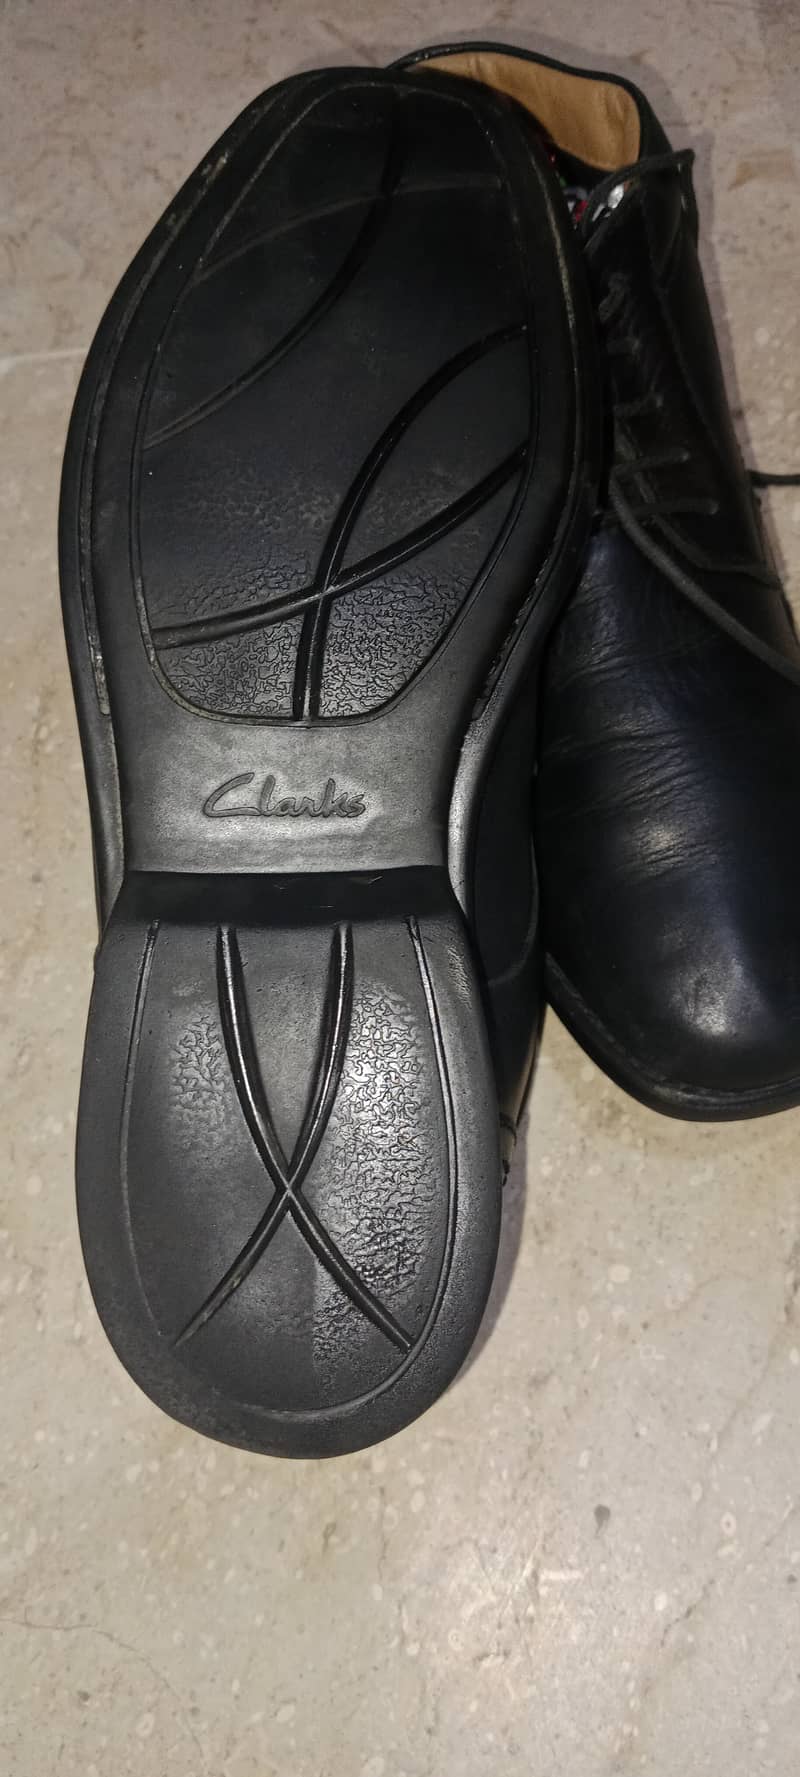 origenal leather Clarks shoes 1